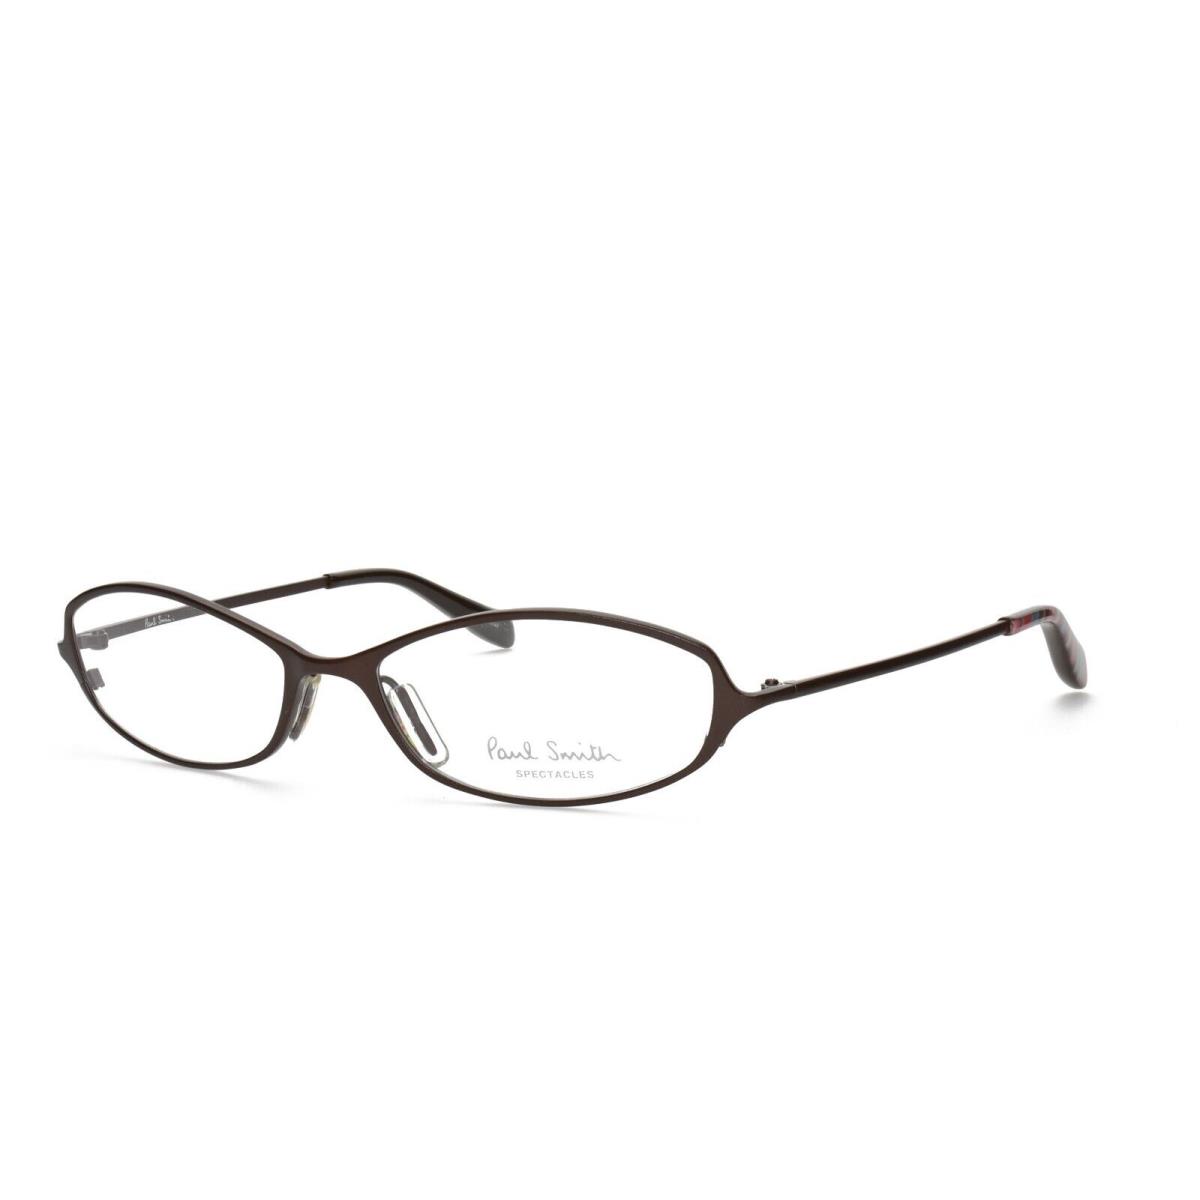 Paul Smith 199 Cho 51-16-130 Brown Vtg Vintage Titanium Eyeglasses Frames